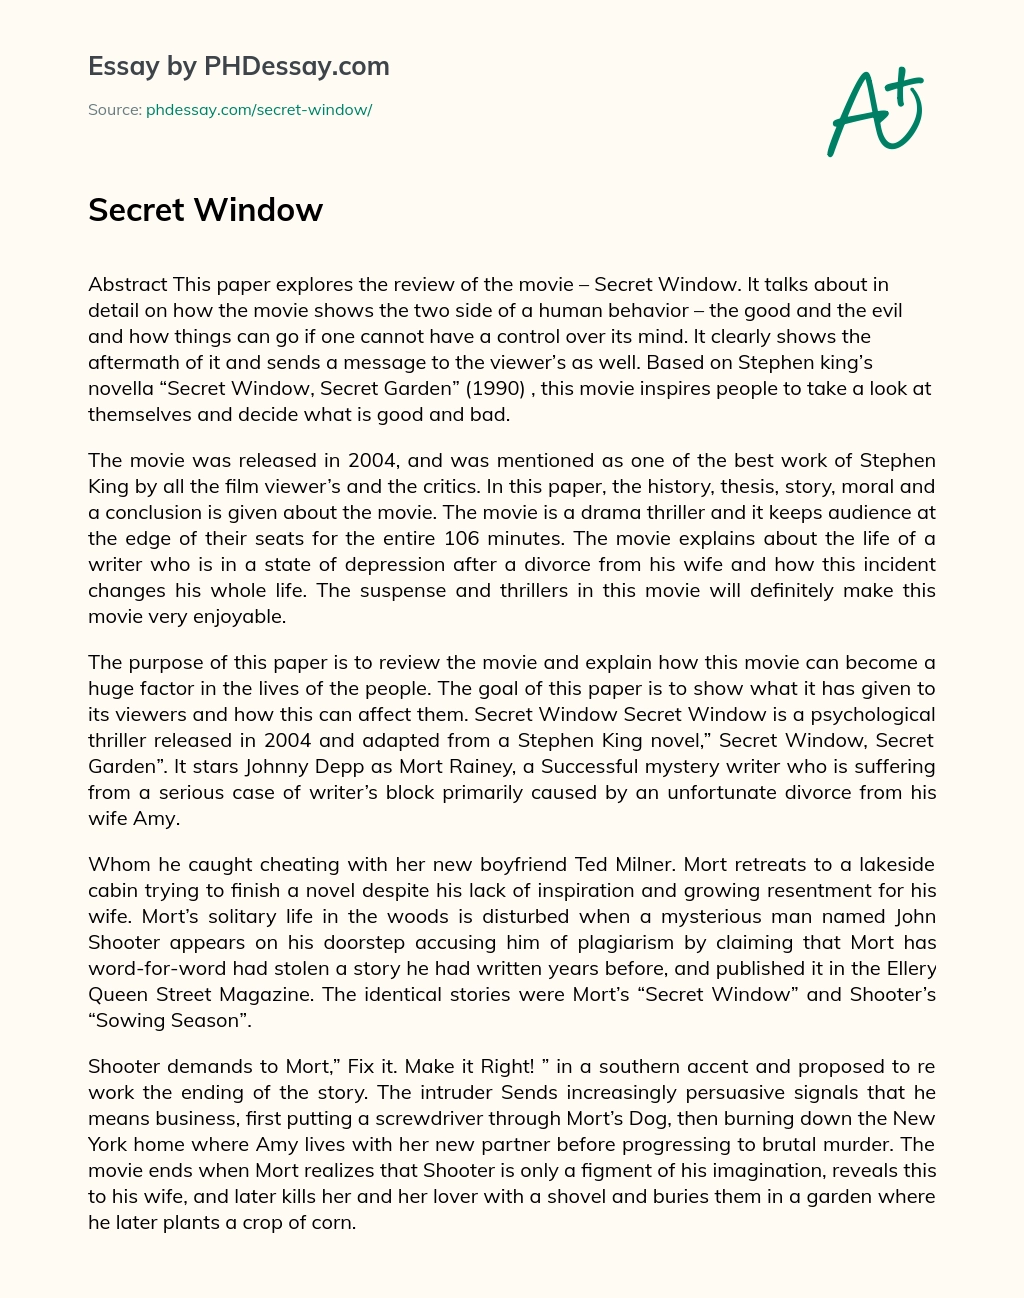 Secret Window essay